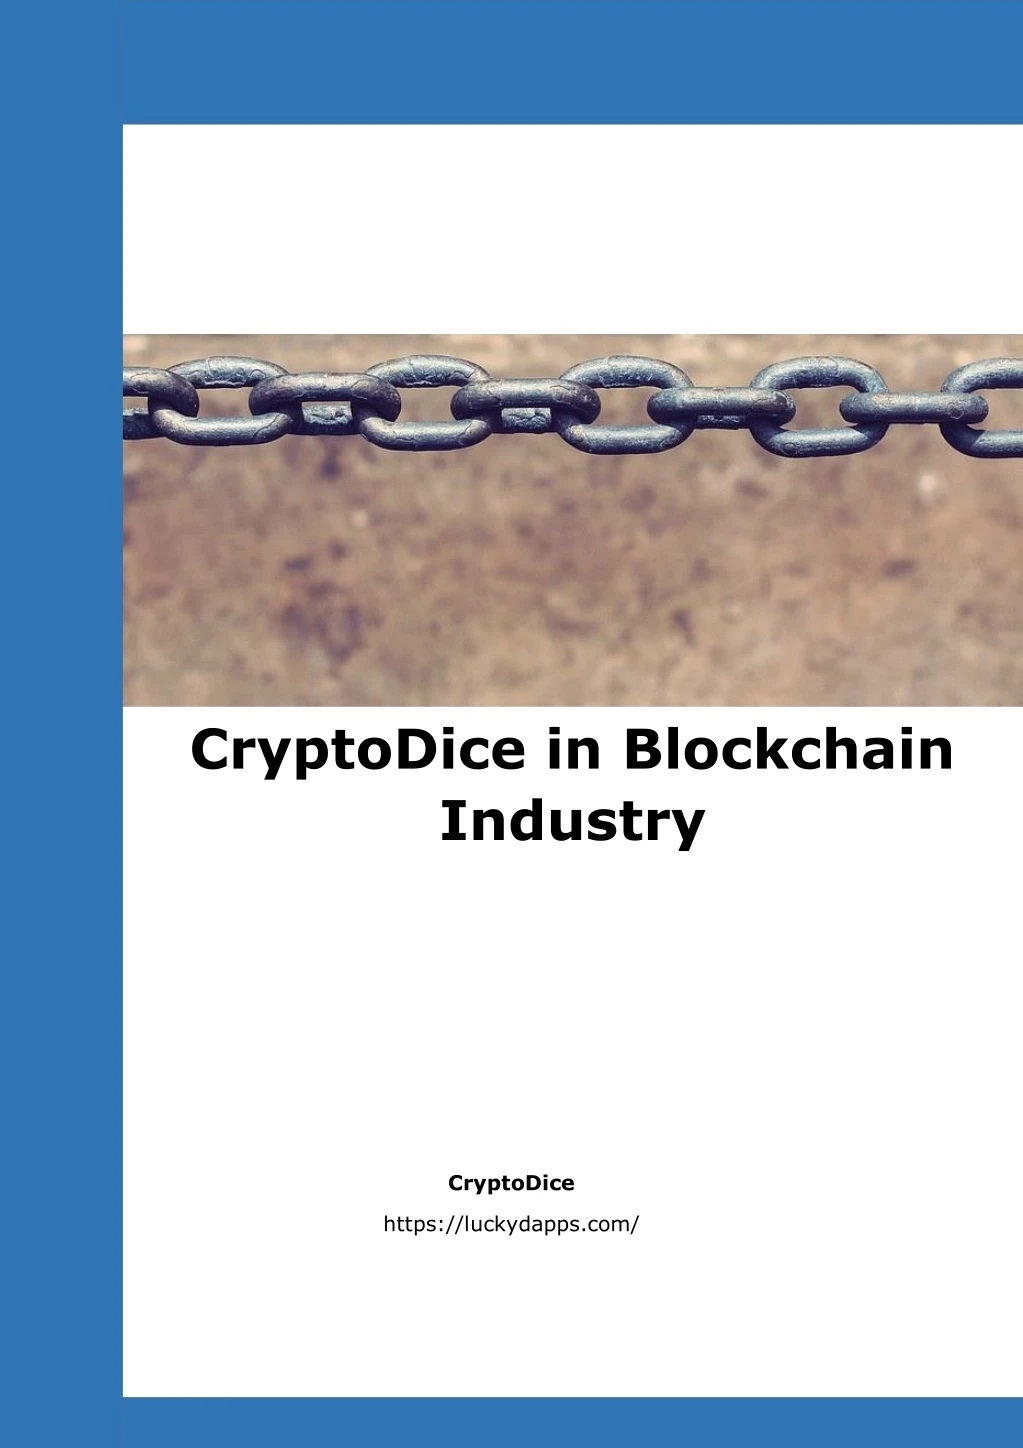 cryptodice in blockchain industry